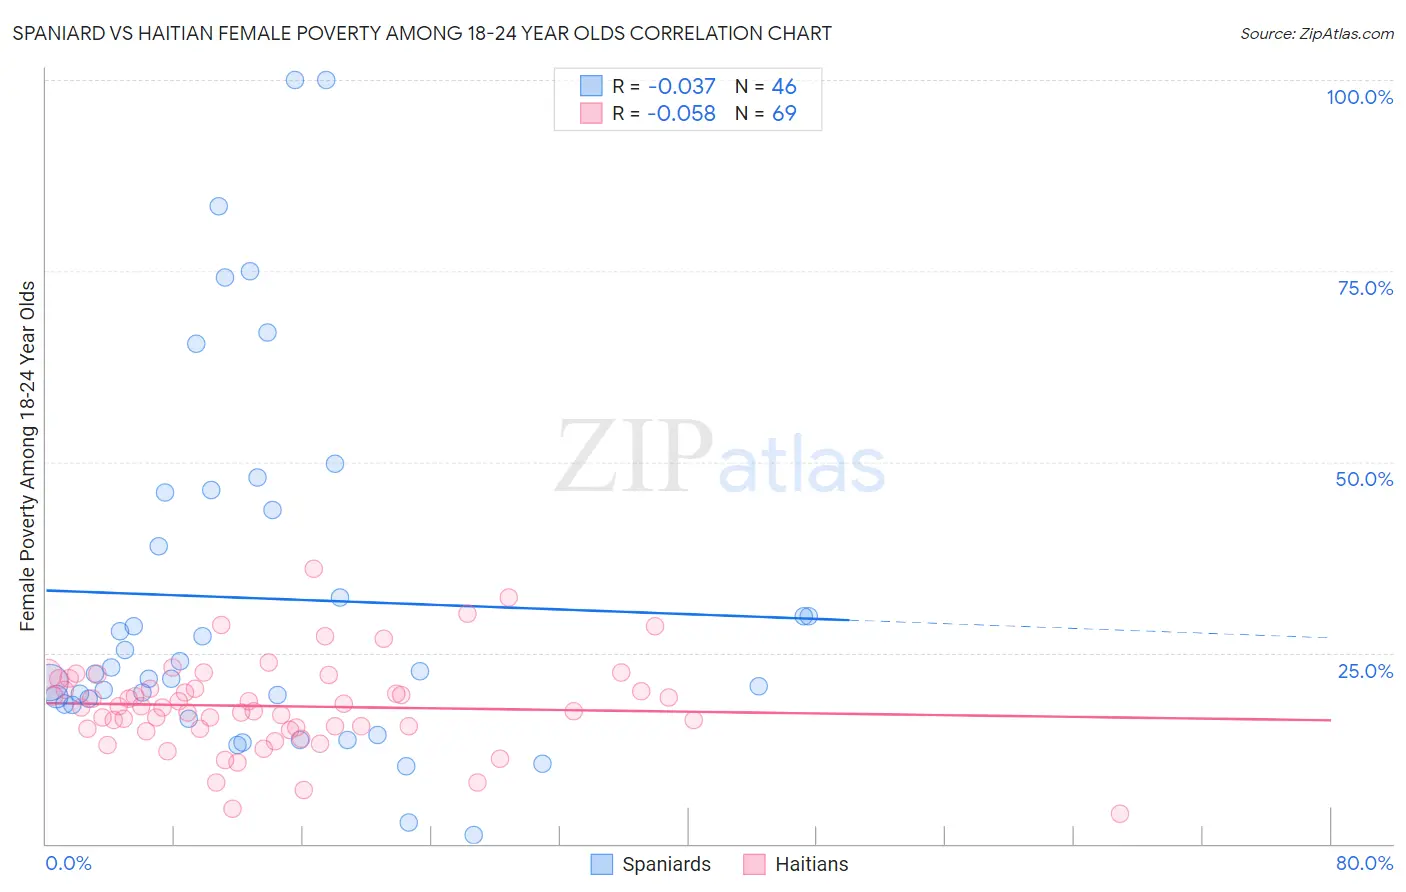 Spaniard vs Haitian Female Poverty Among 18-24 Year Olds